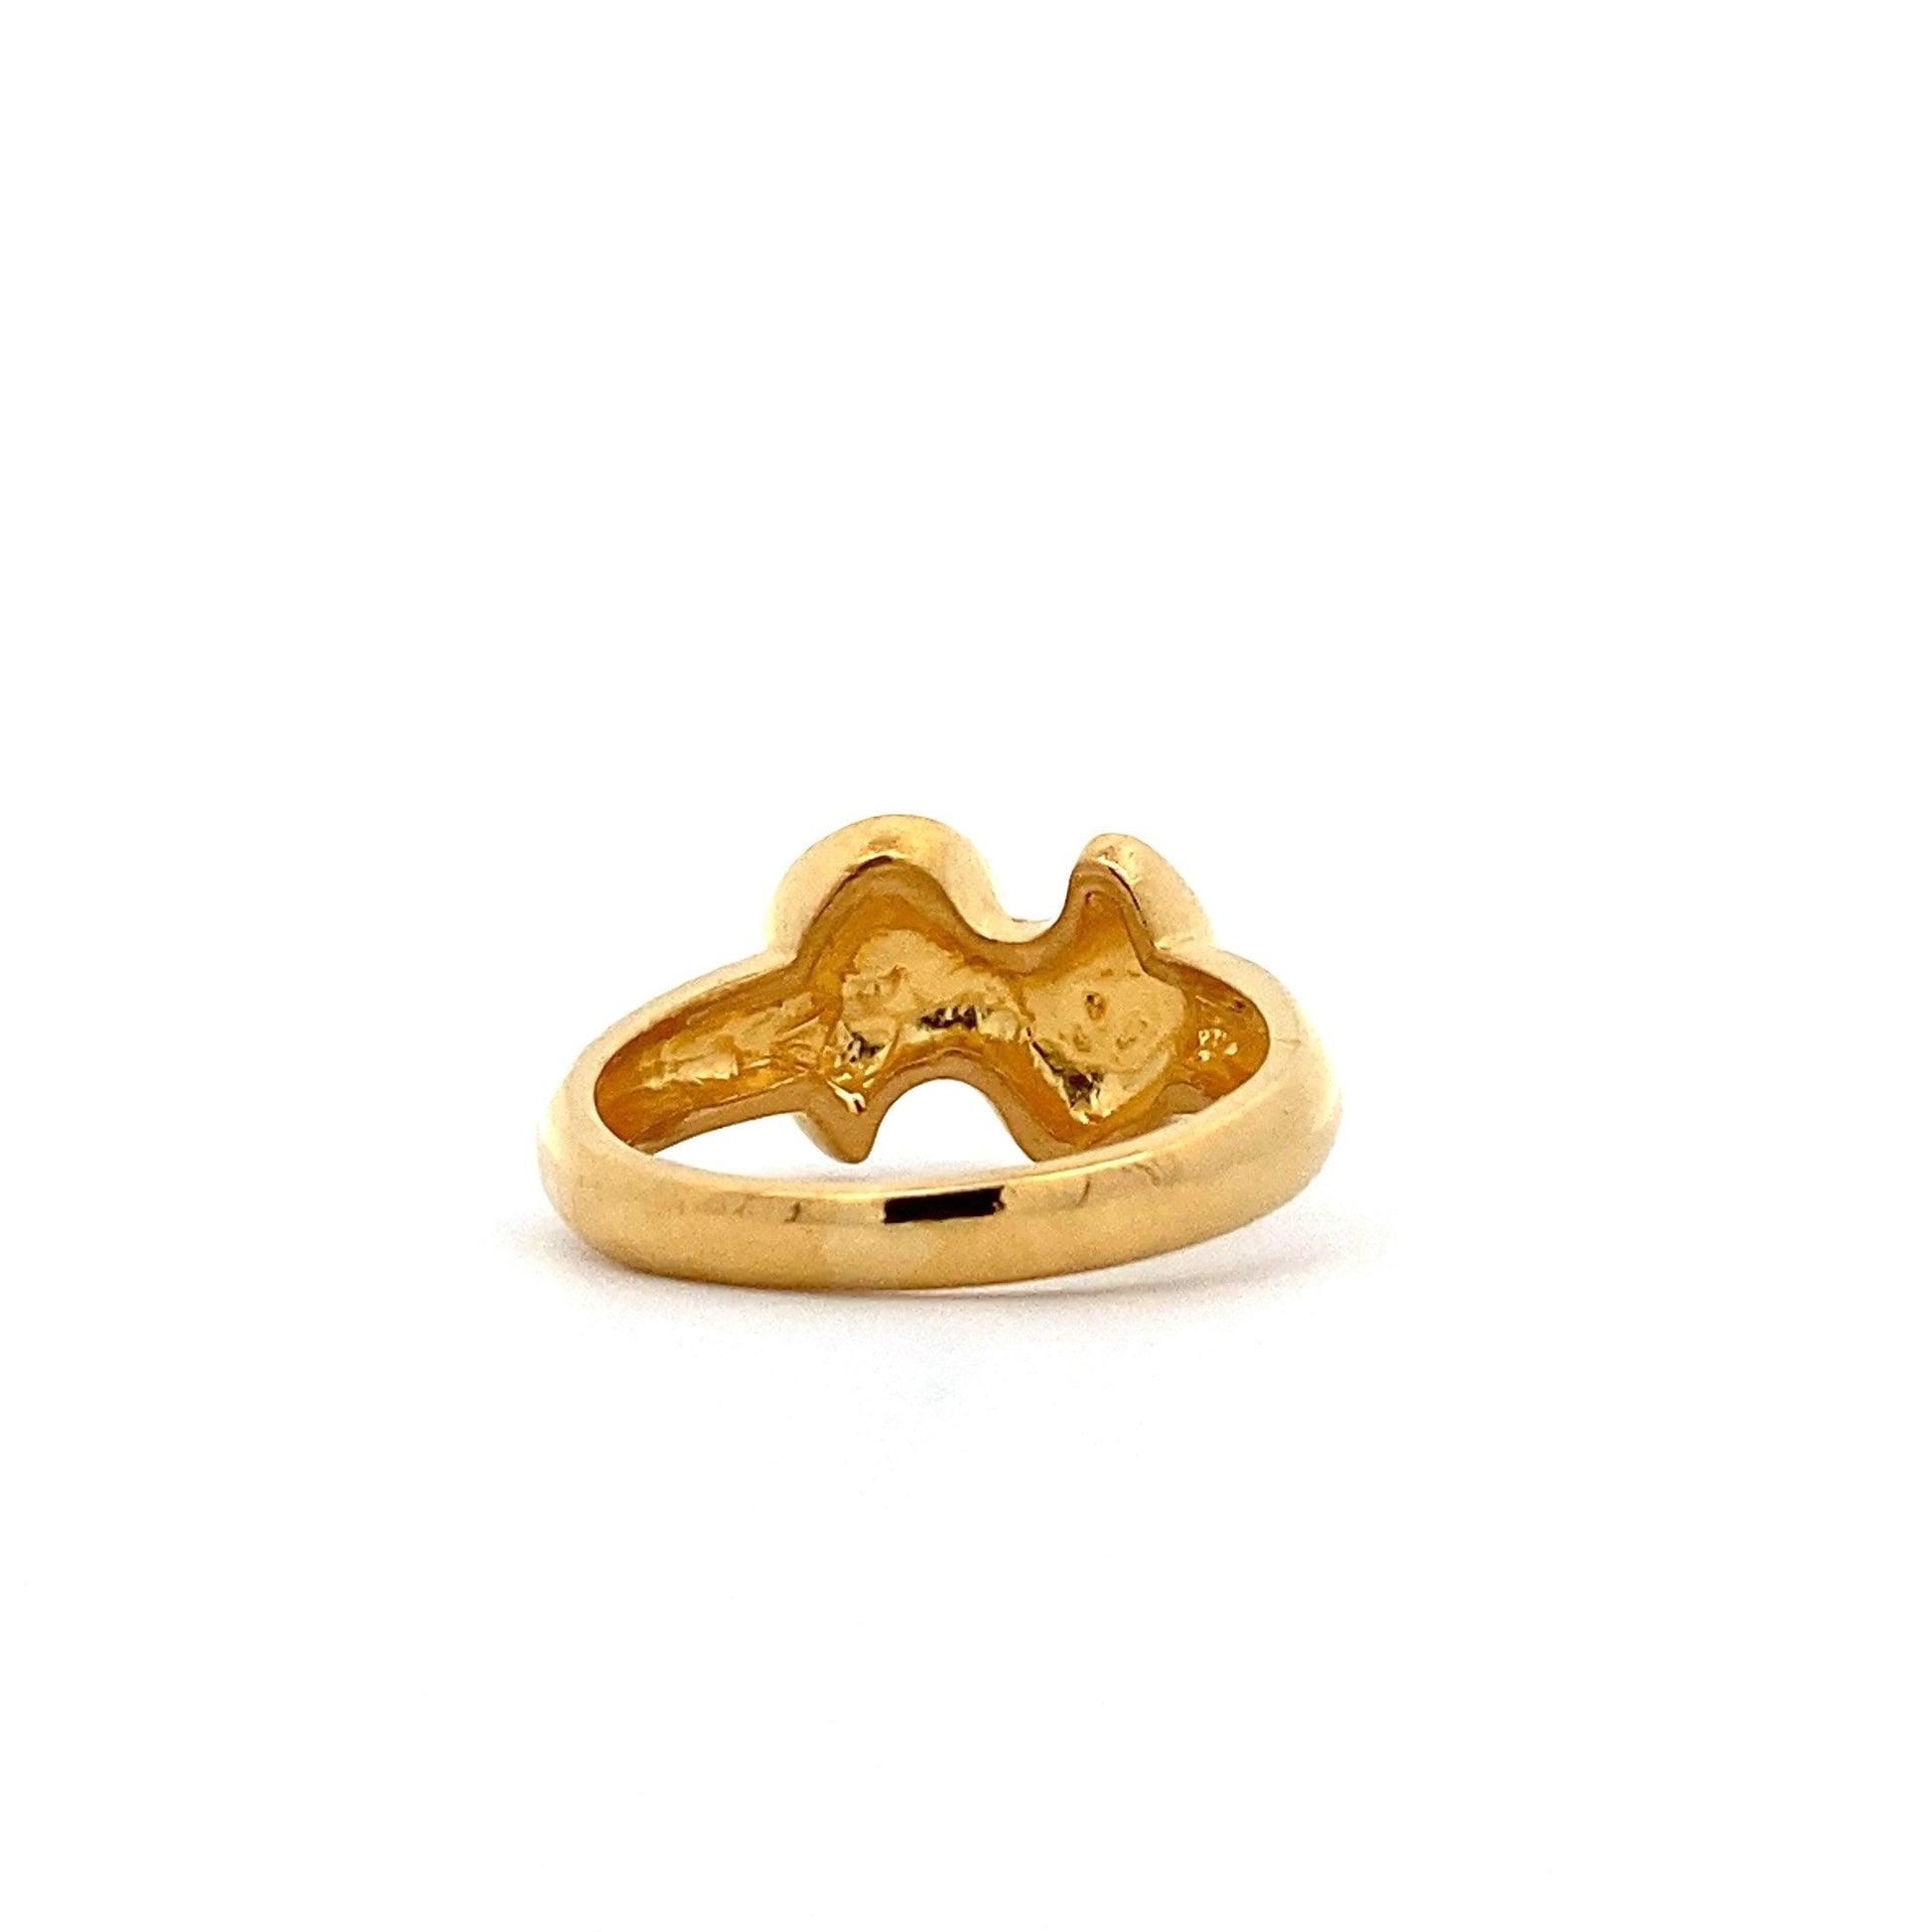 24K Yellow Gold Swirl Top Ring - ipawnishop.com